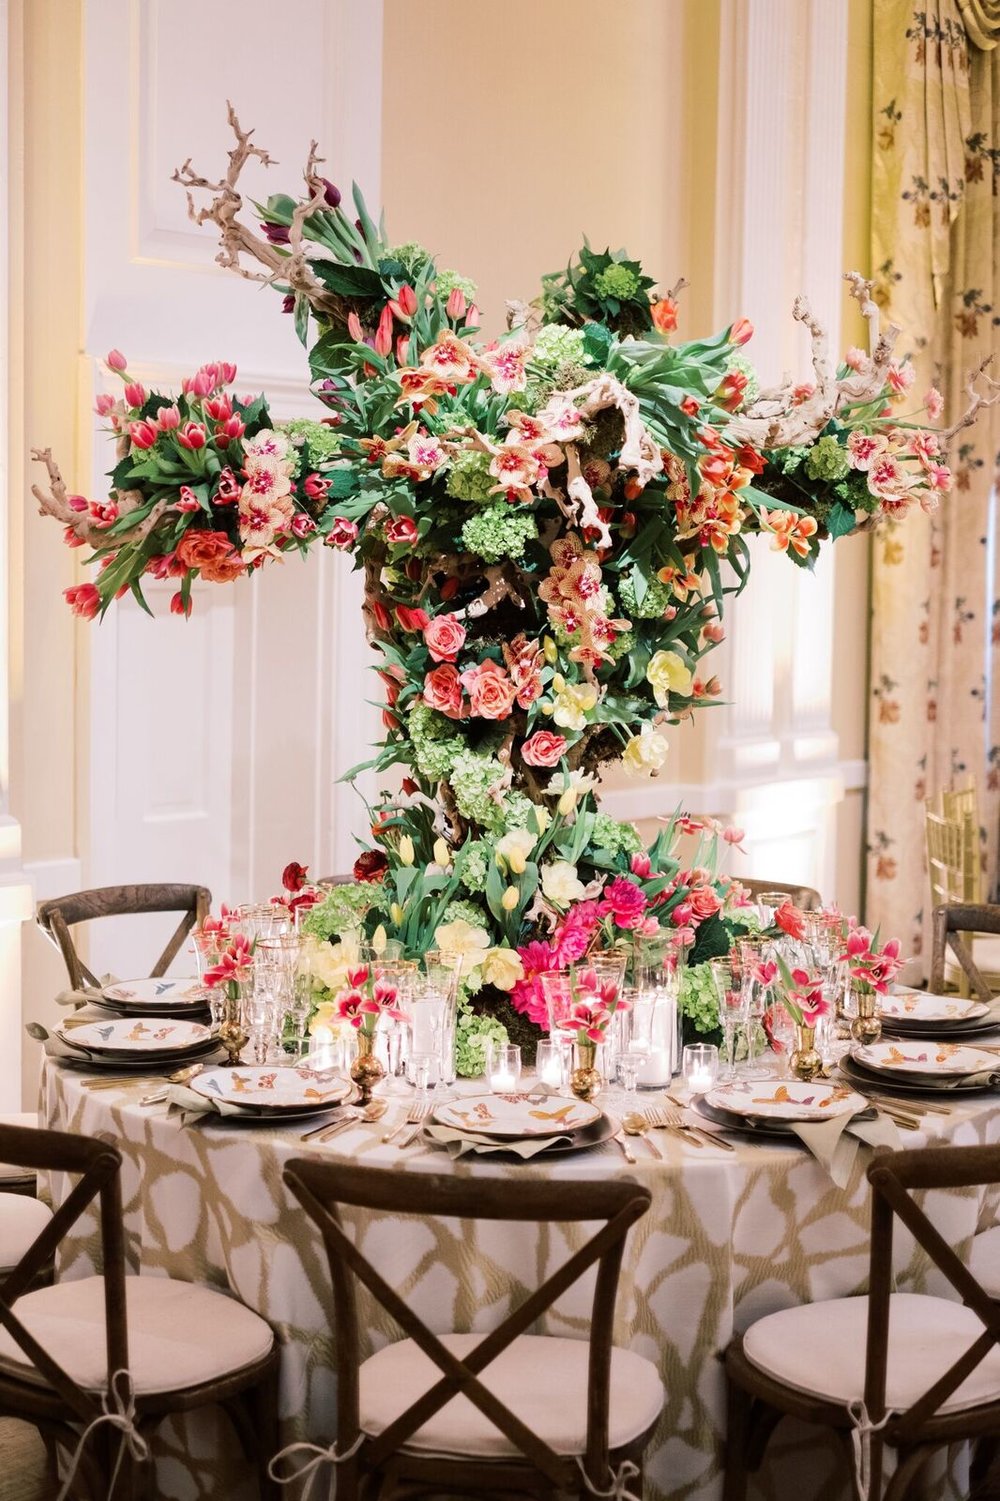 About — Haute Floral - Luxury Florist in Dallas